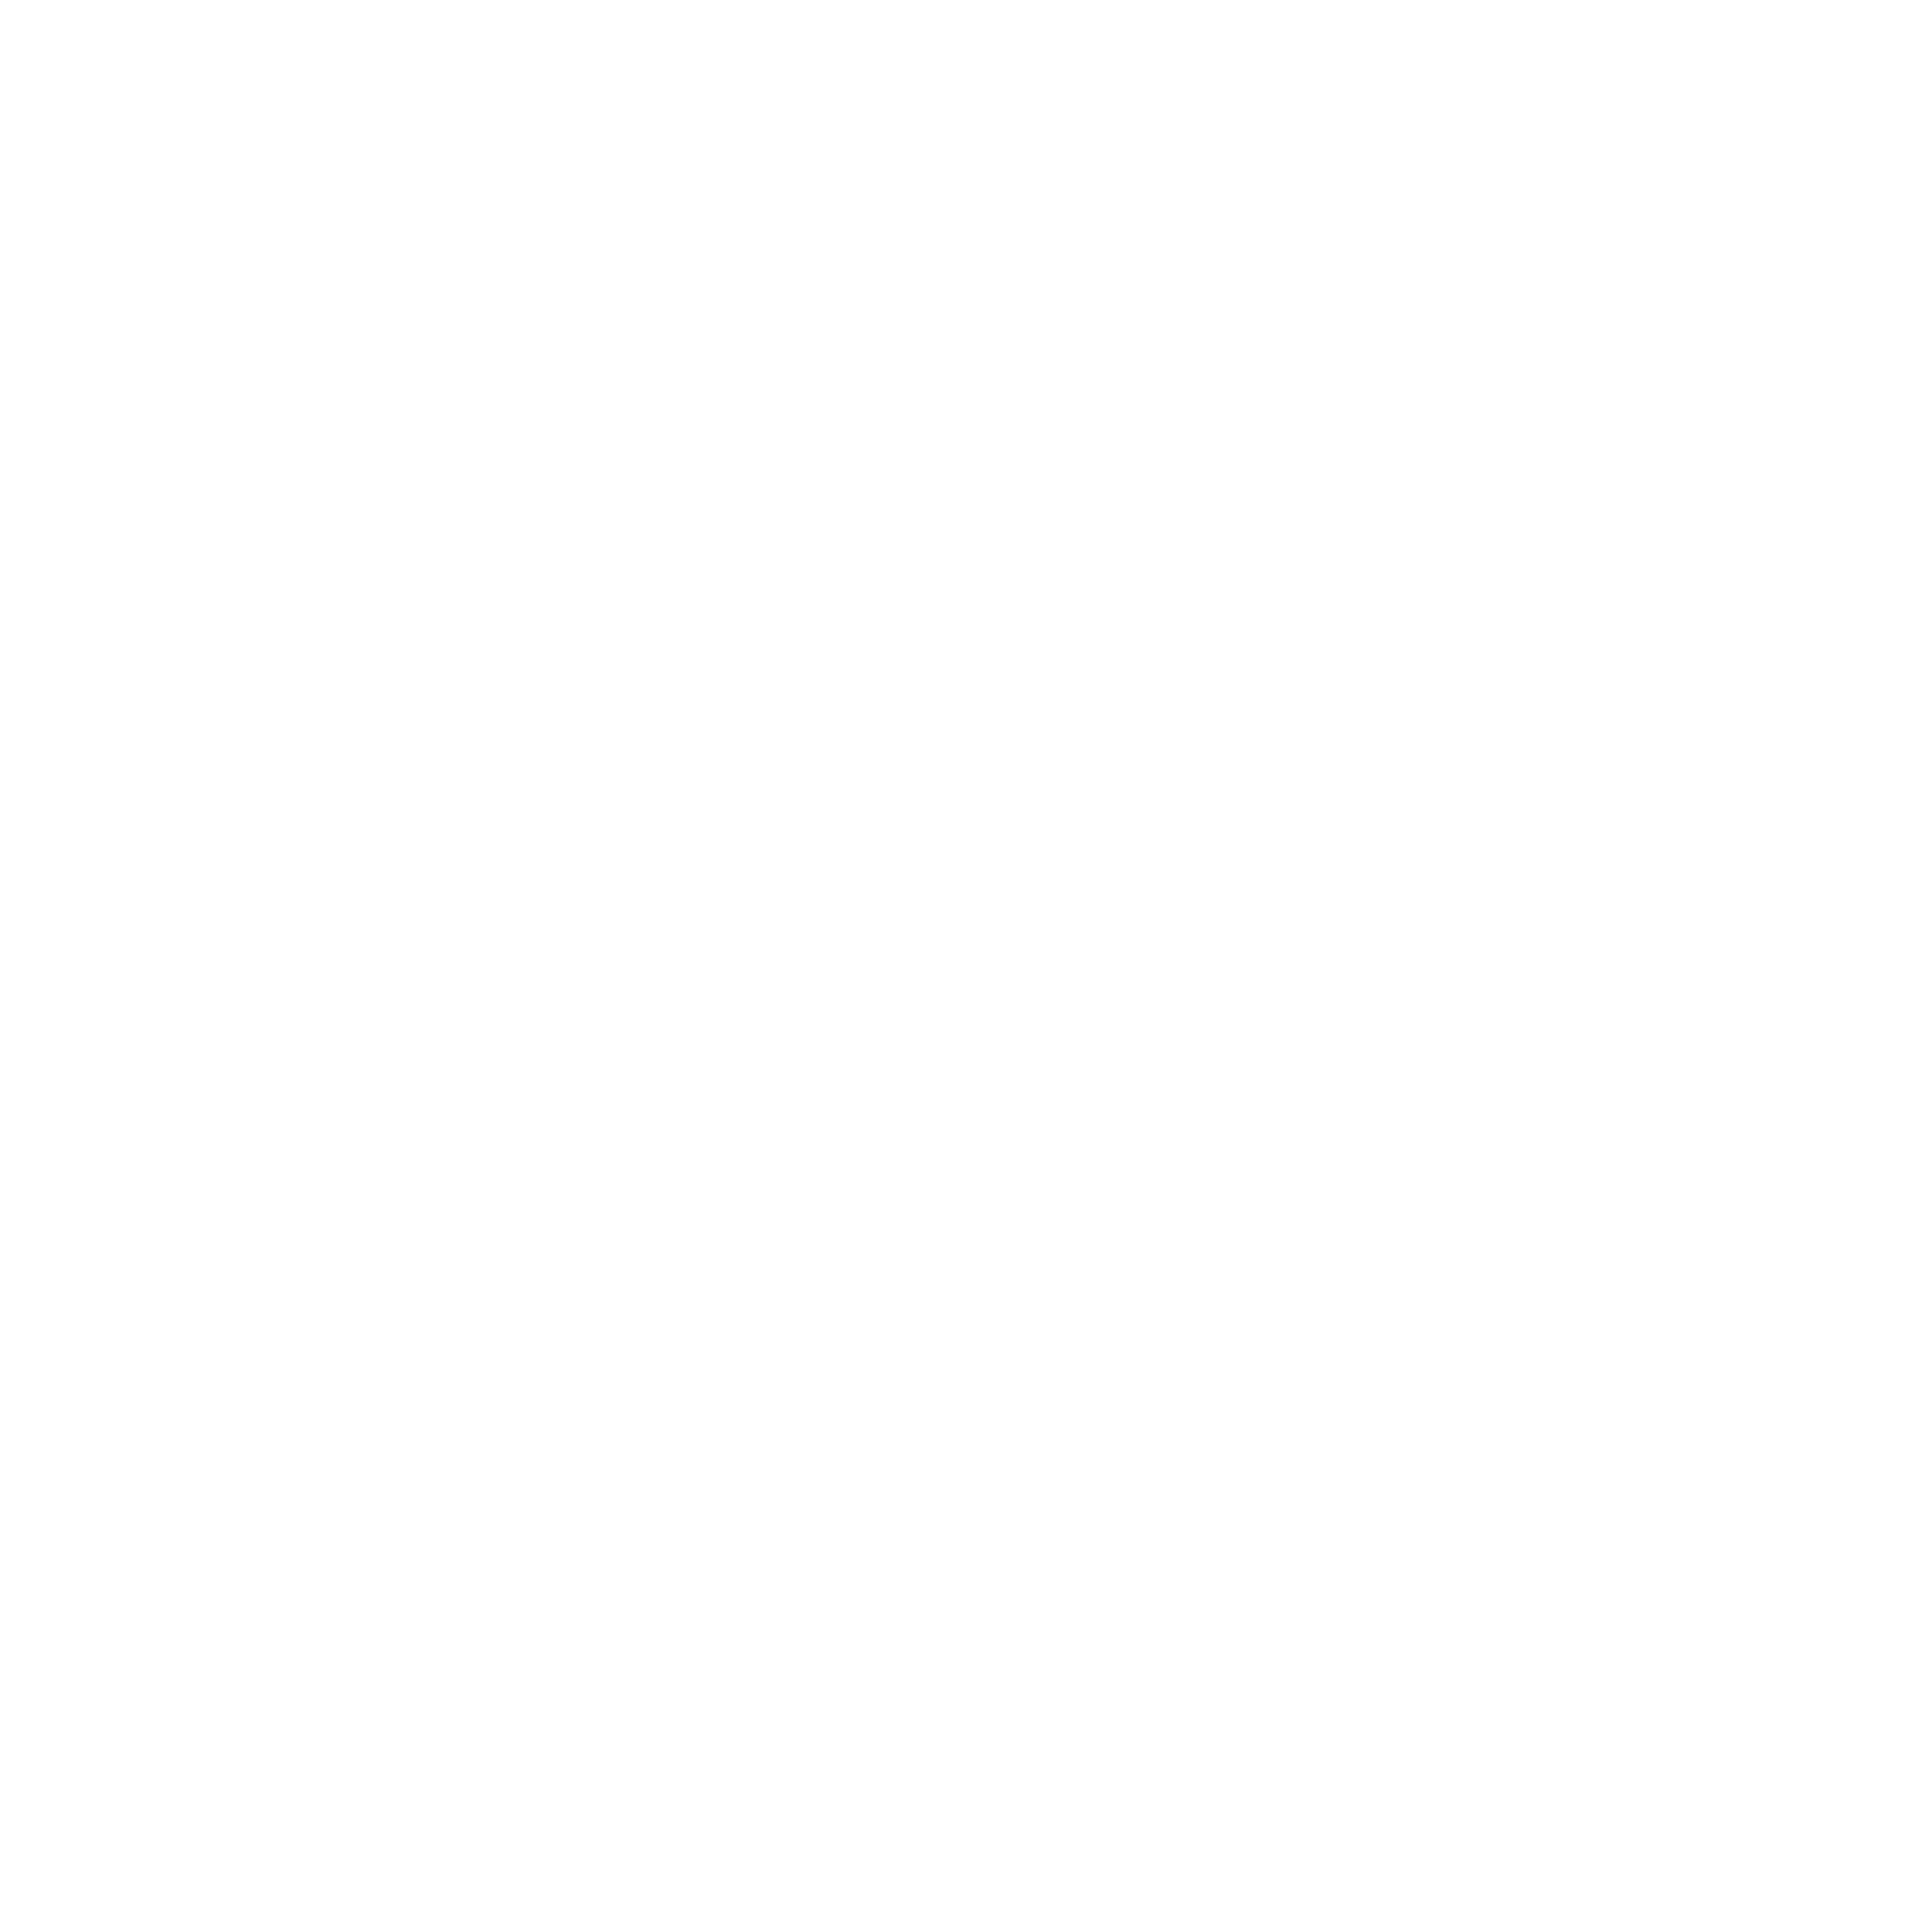 Meba Logo - Meba Logo PNG Transparent & SVG Vector - Freebie Supply